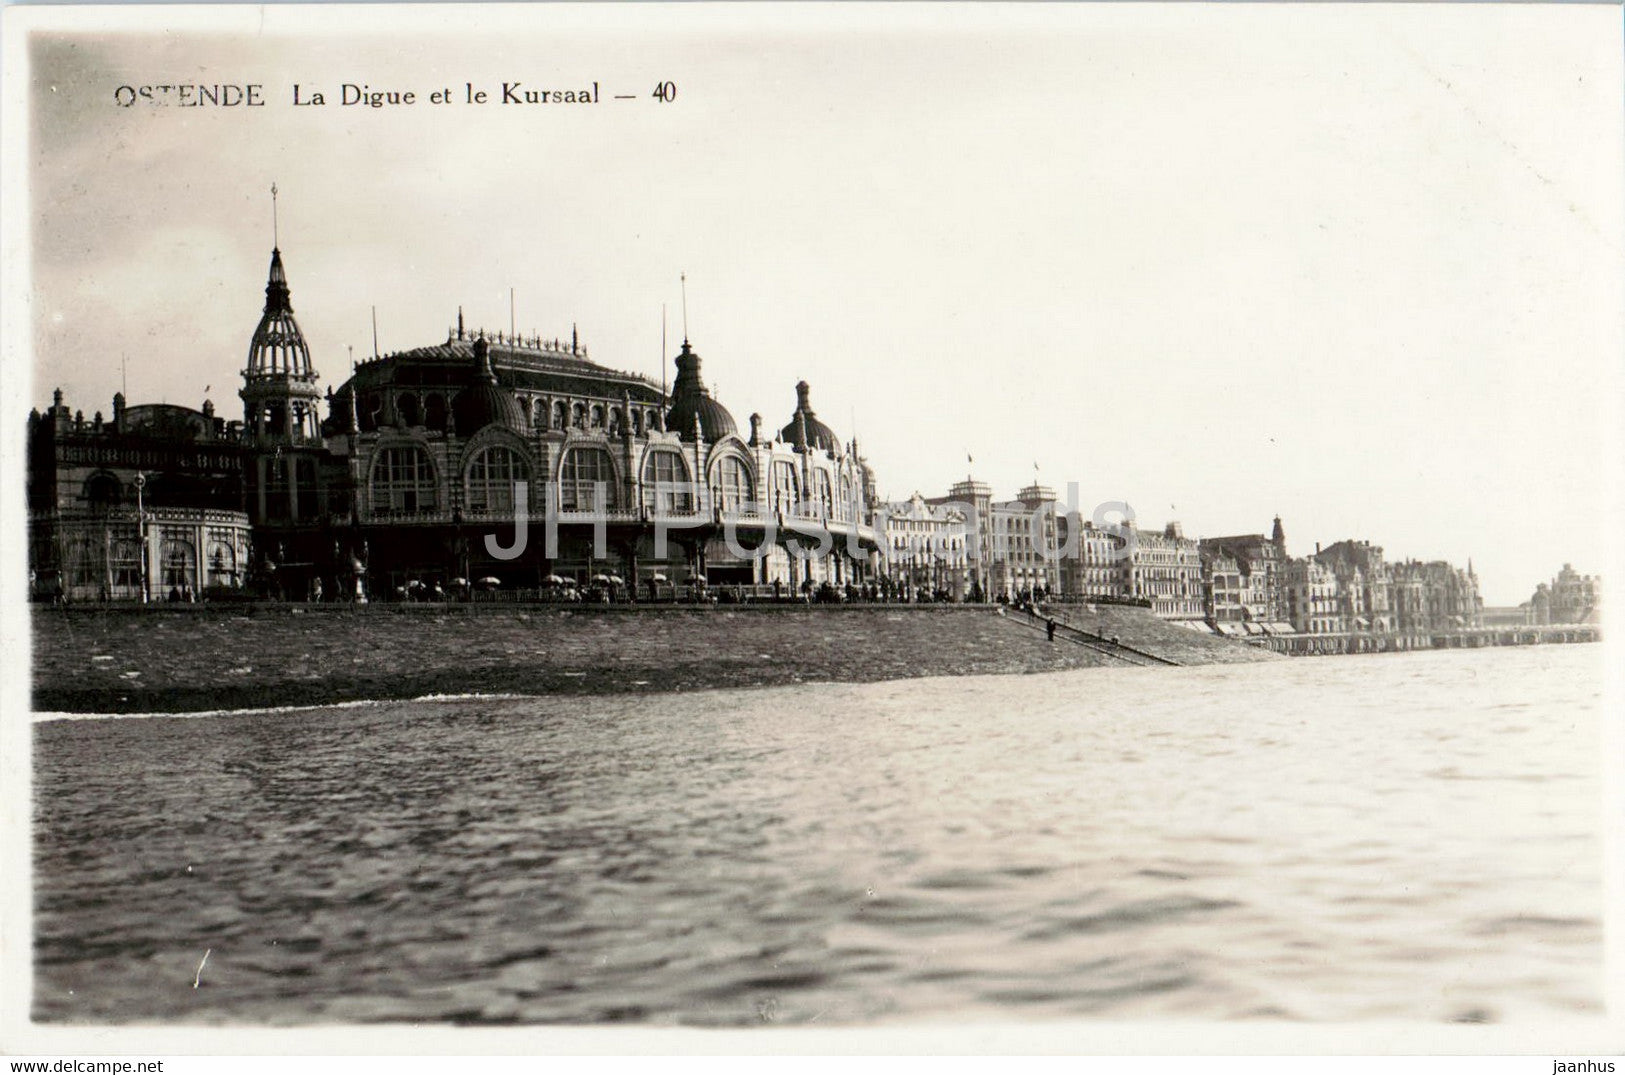 Ostende - Oostende - La Digue et le Kursaal - 40 - old postcard - Belgium - unused - JH Postcards